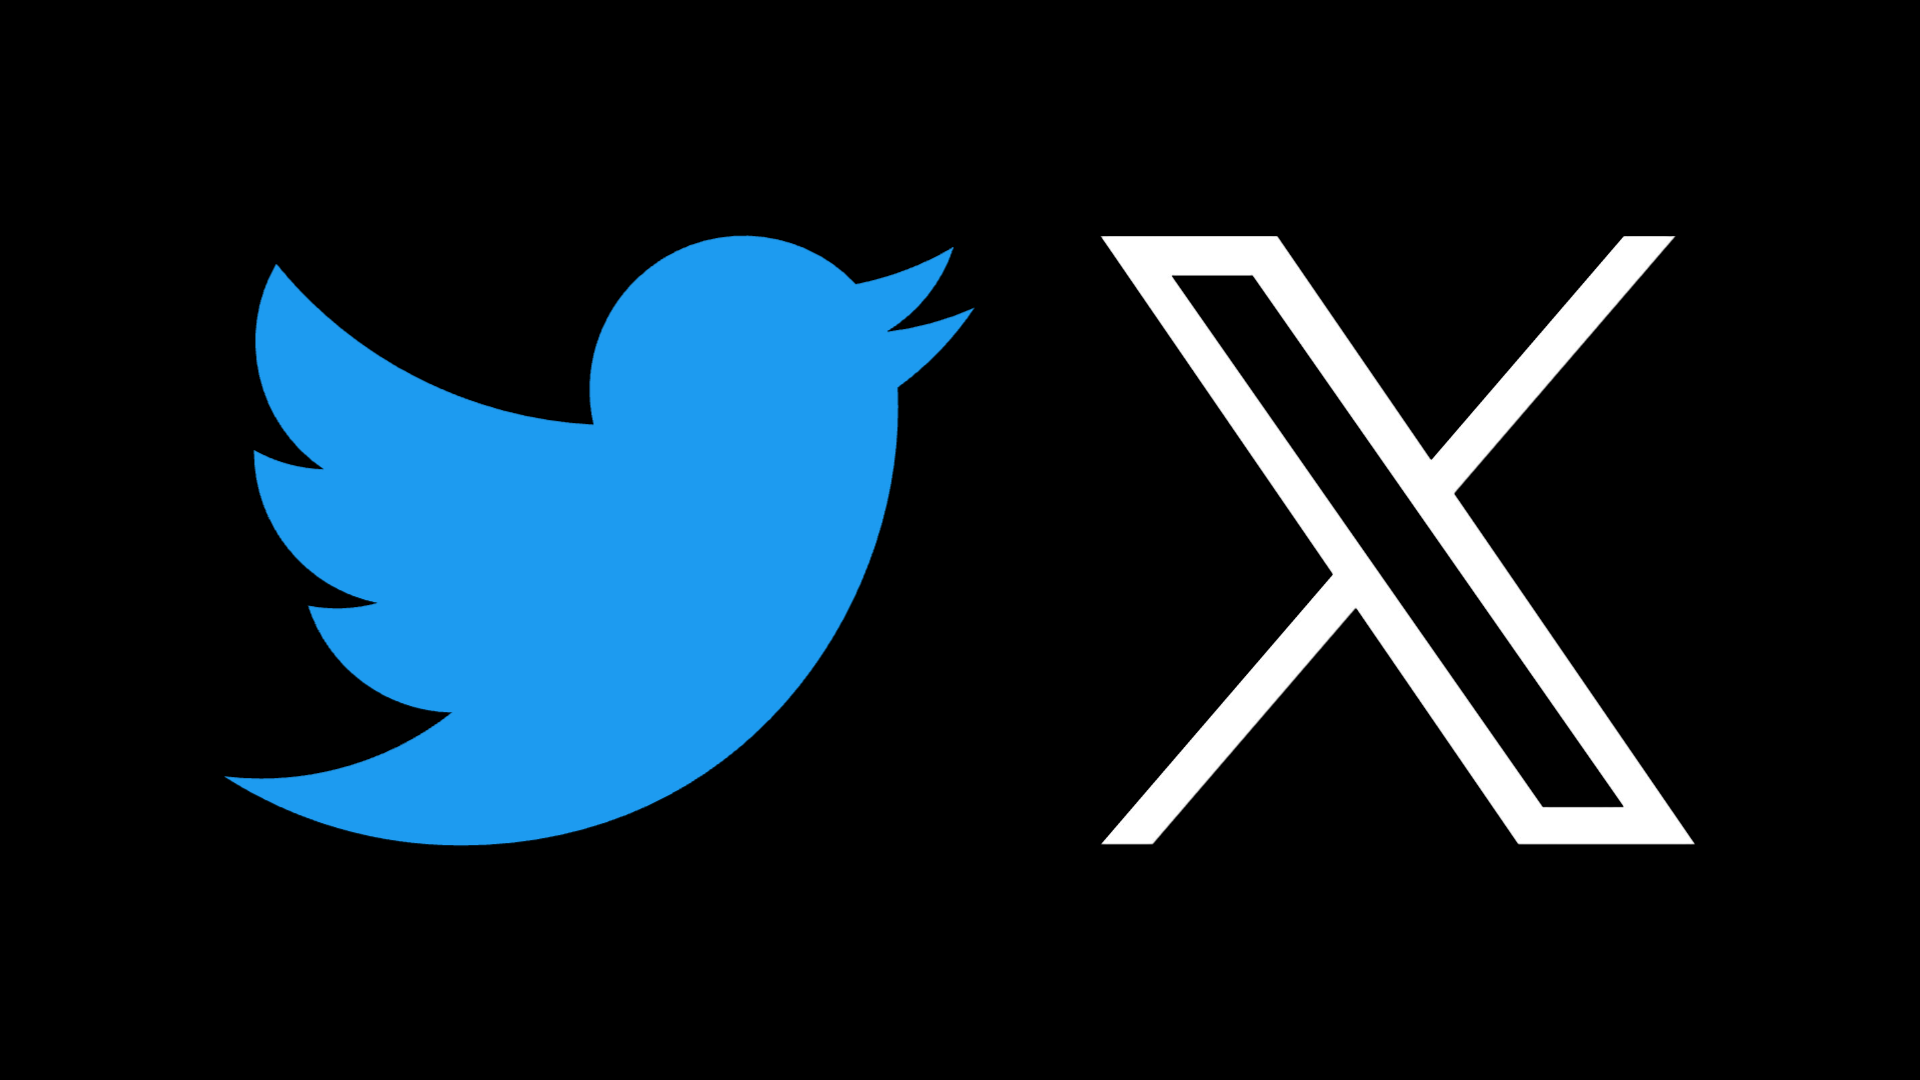 Twitter-logoet med et X symbolsk.